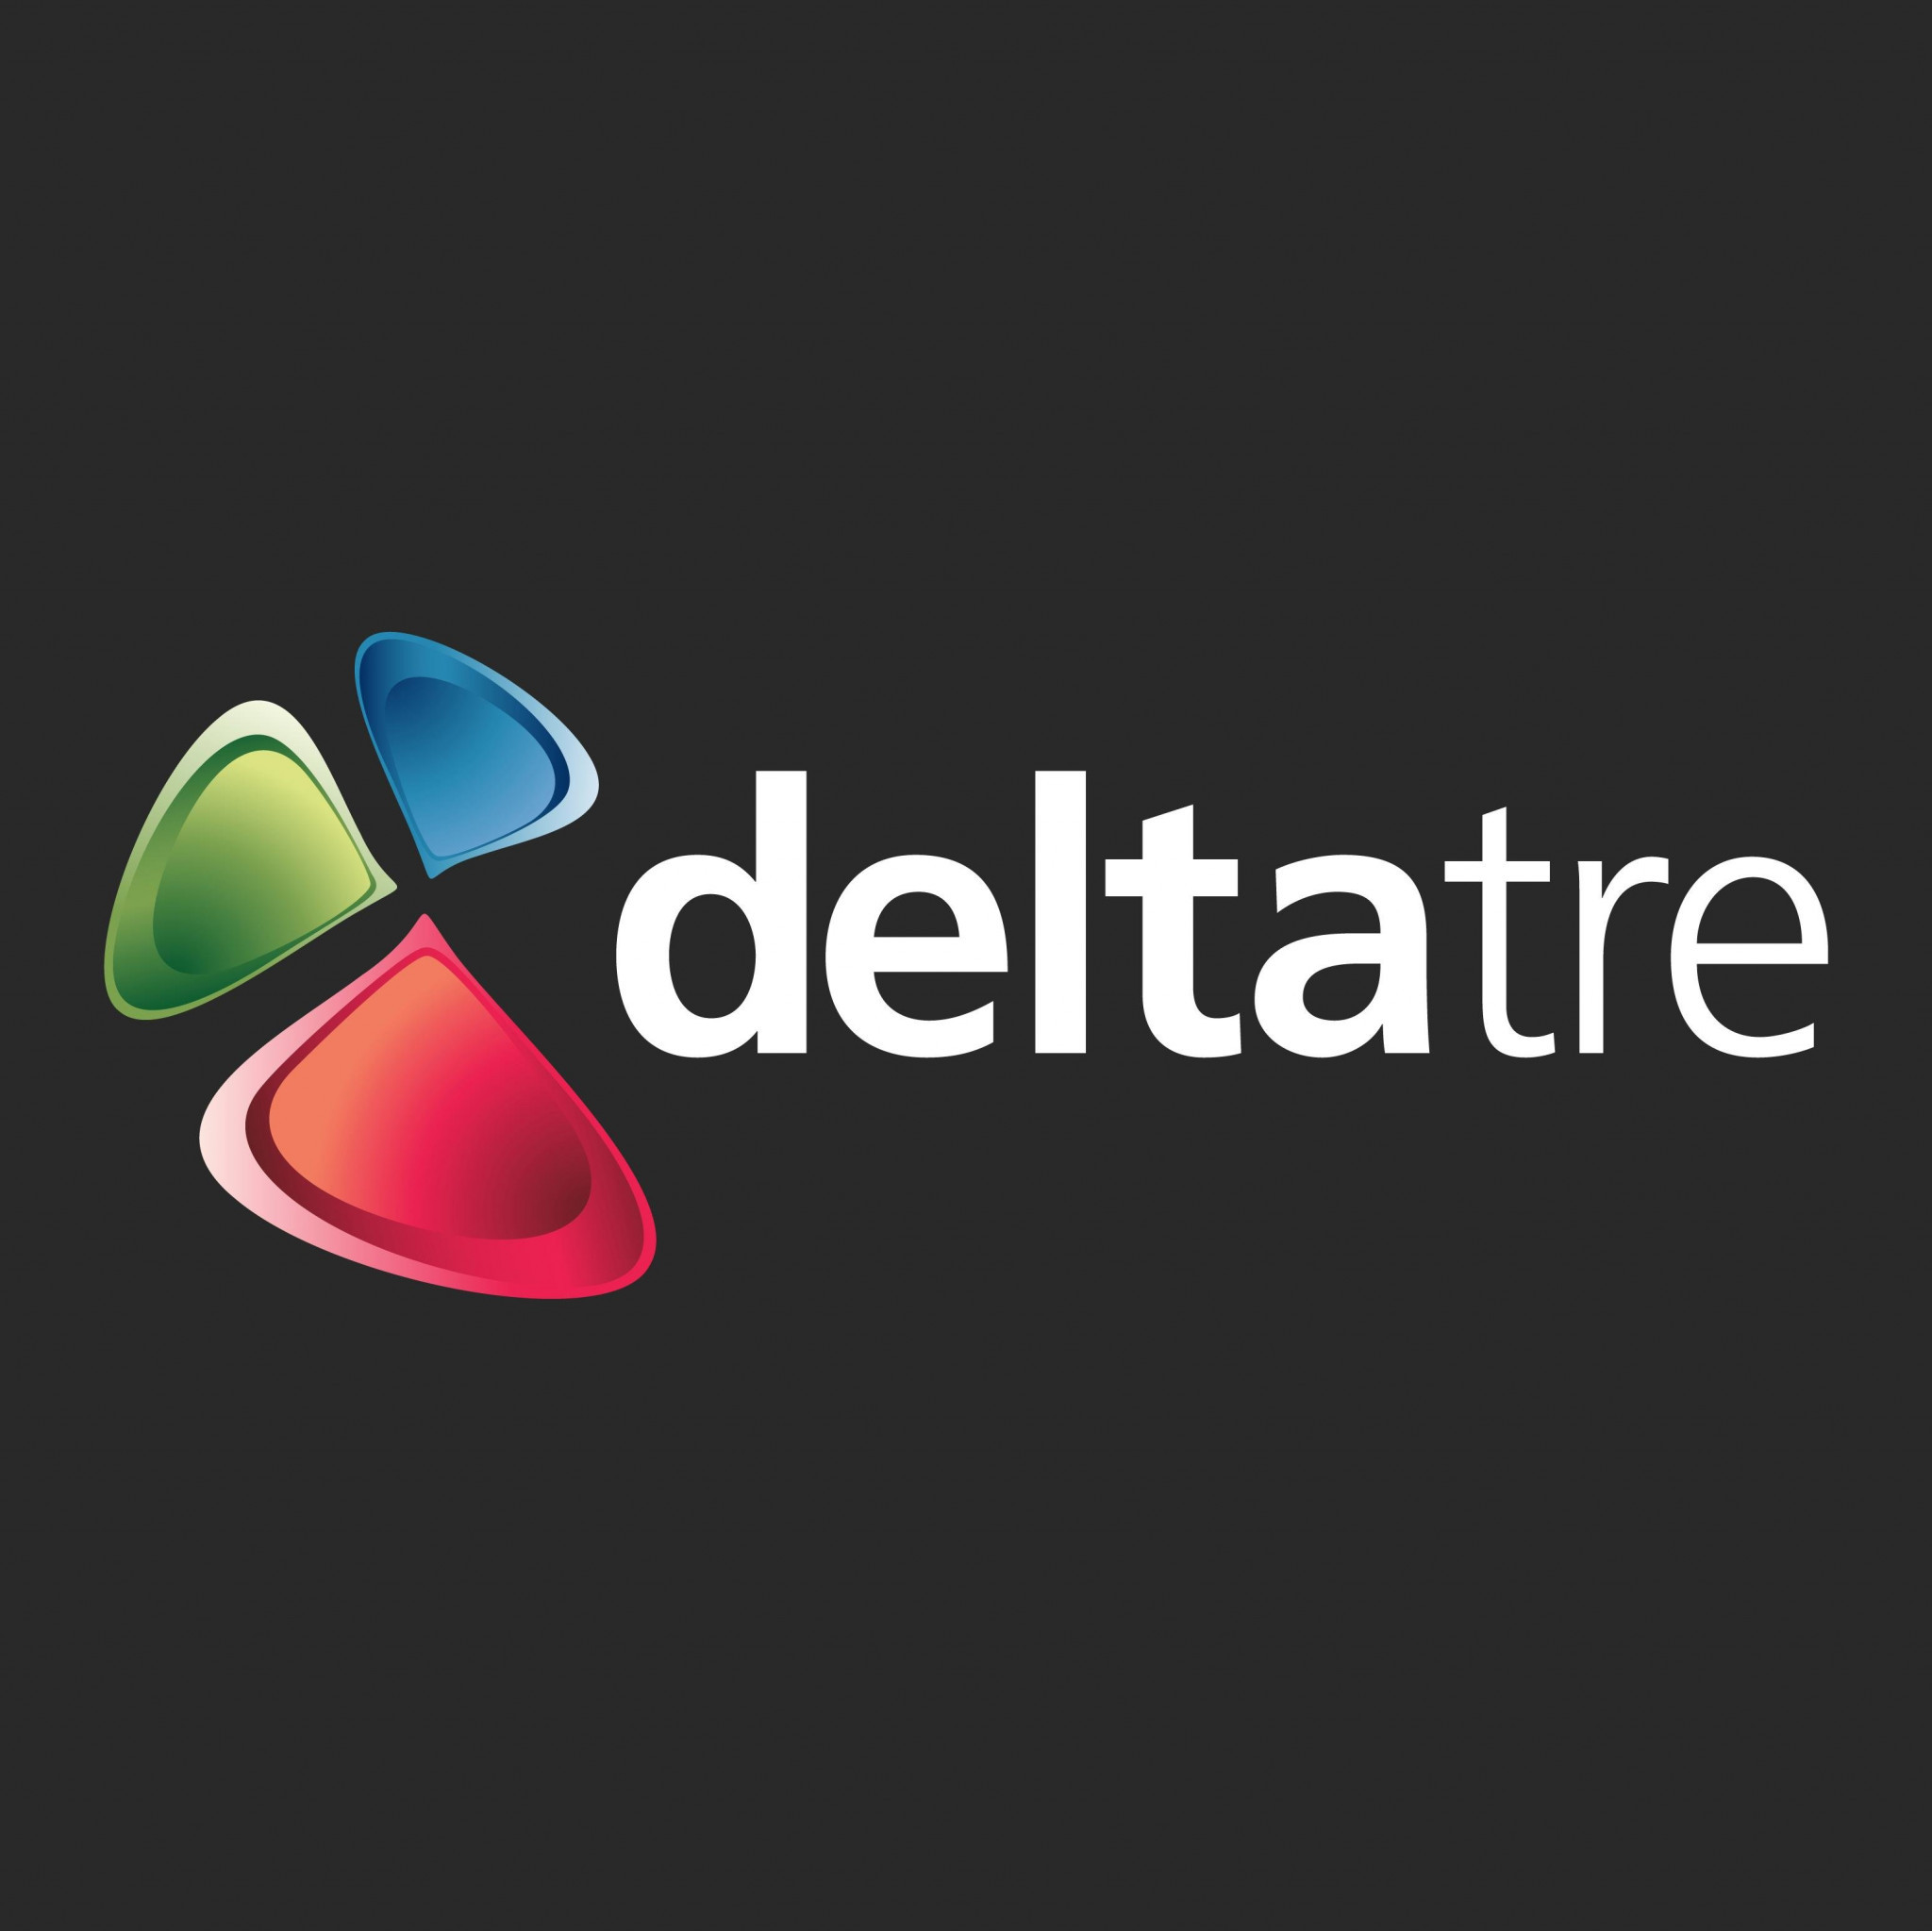 Deltatre to build website and provide mobile applications for Jakarta Palembang 2018 after signing agreement